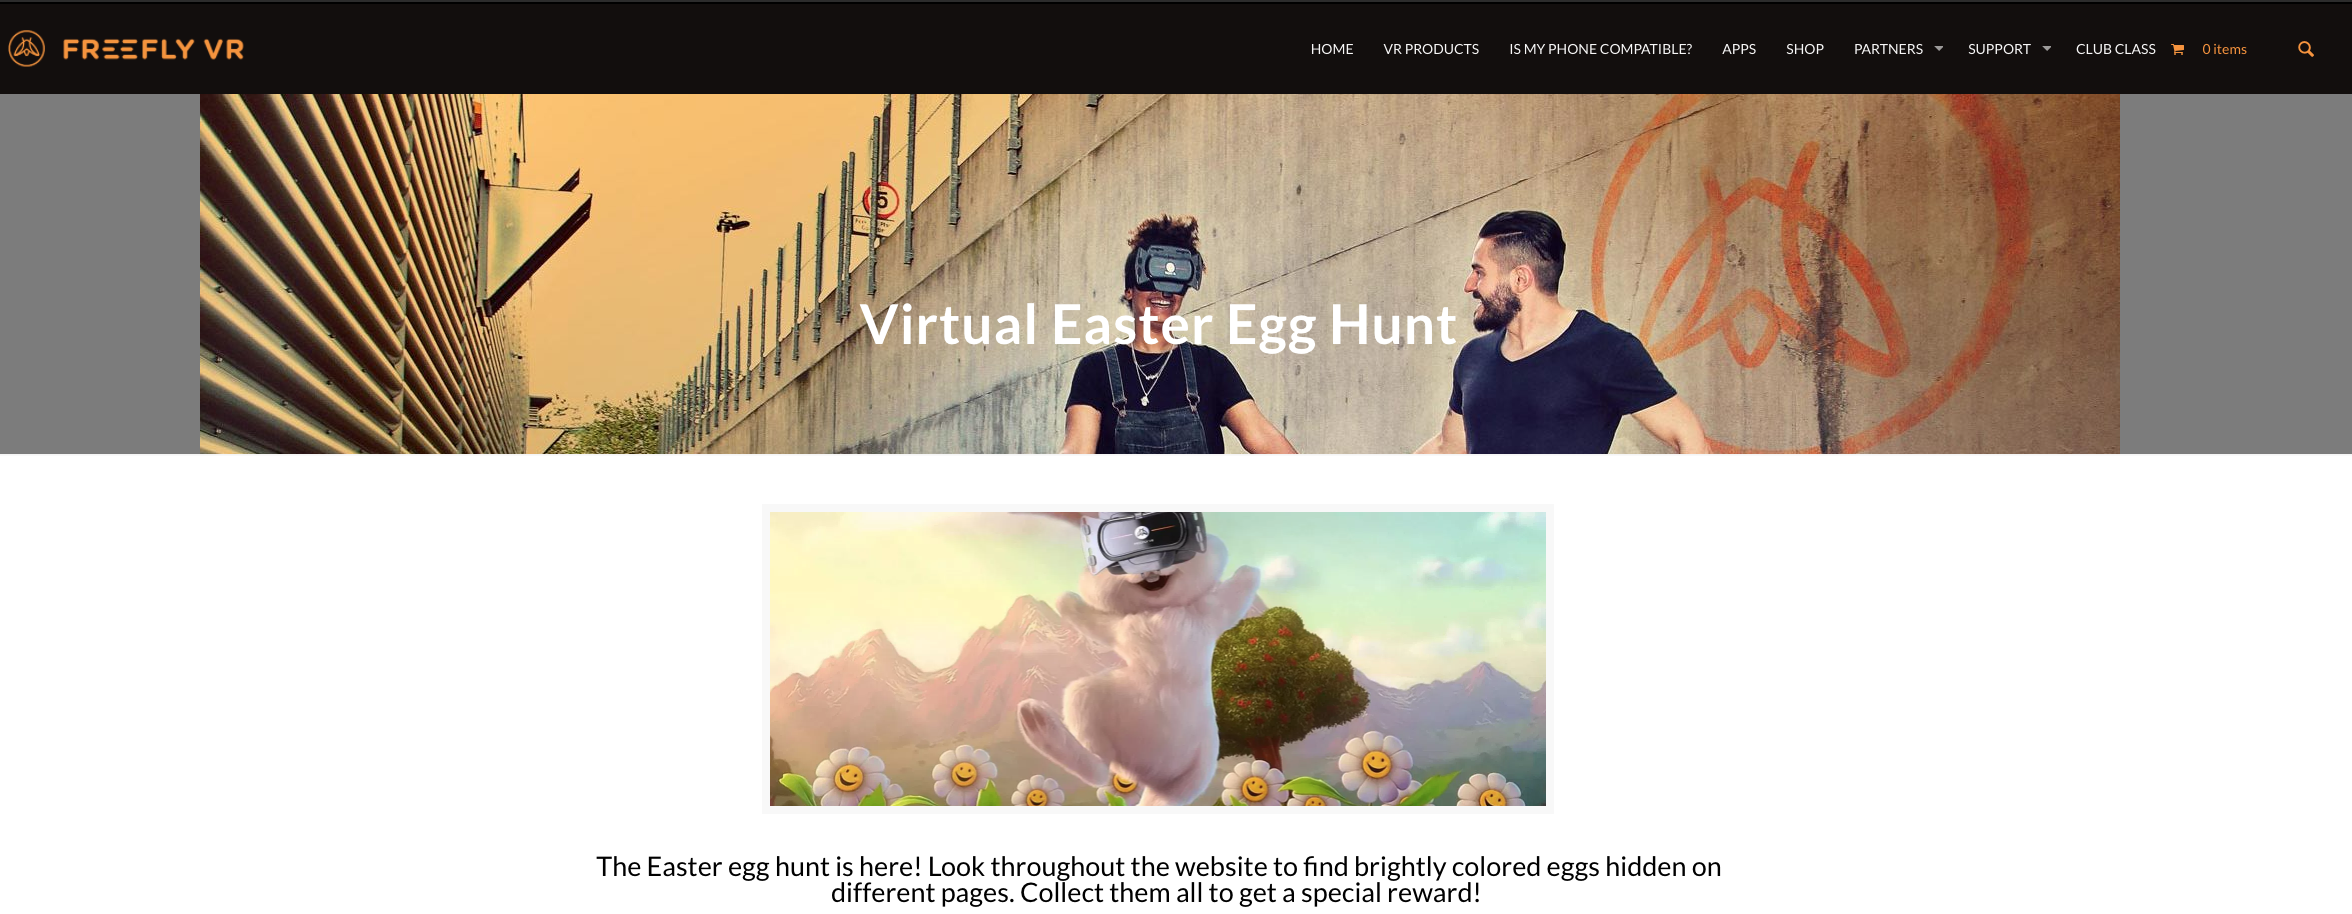 FreeflyVR Easter egg hunt on website